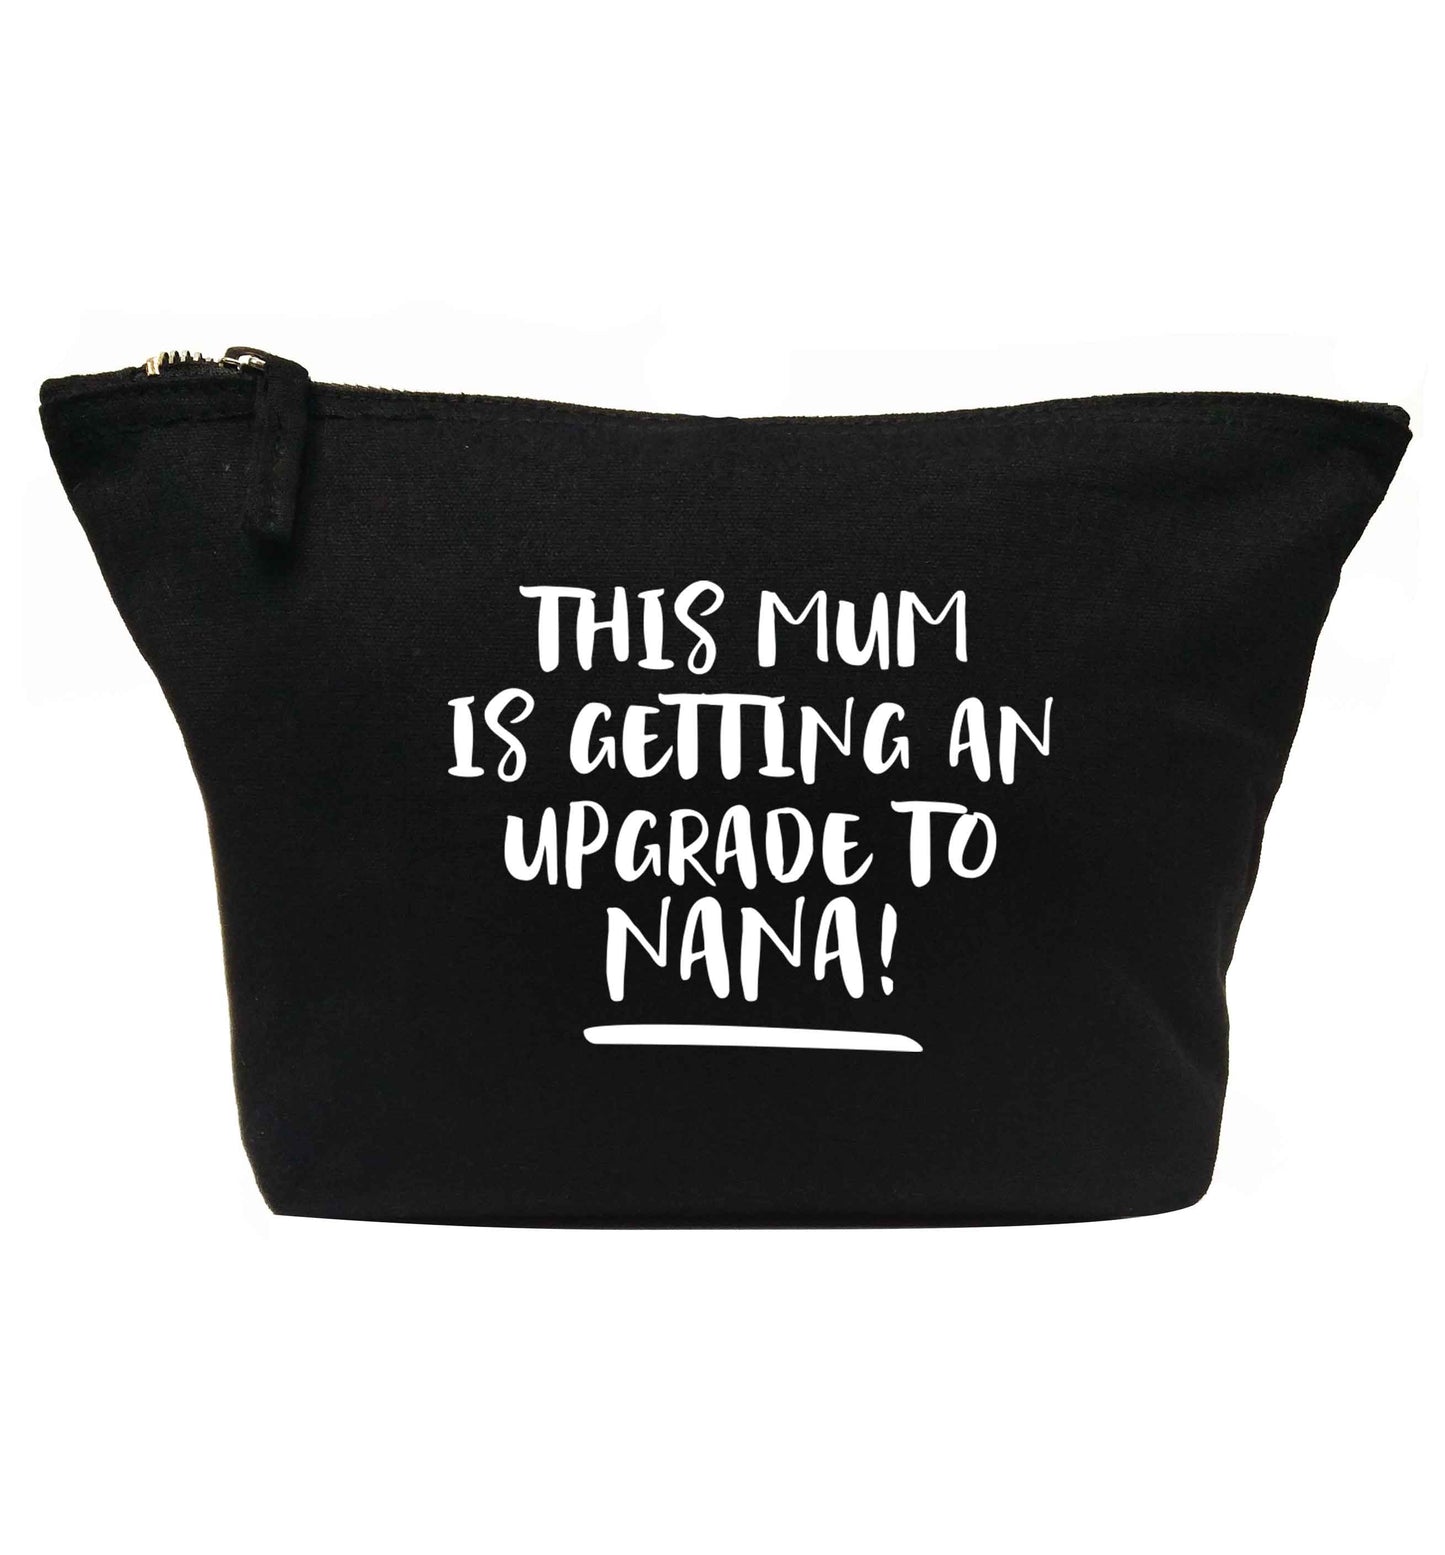 This mum is getting an upgrade to nana! | makeup / wash bag